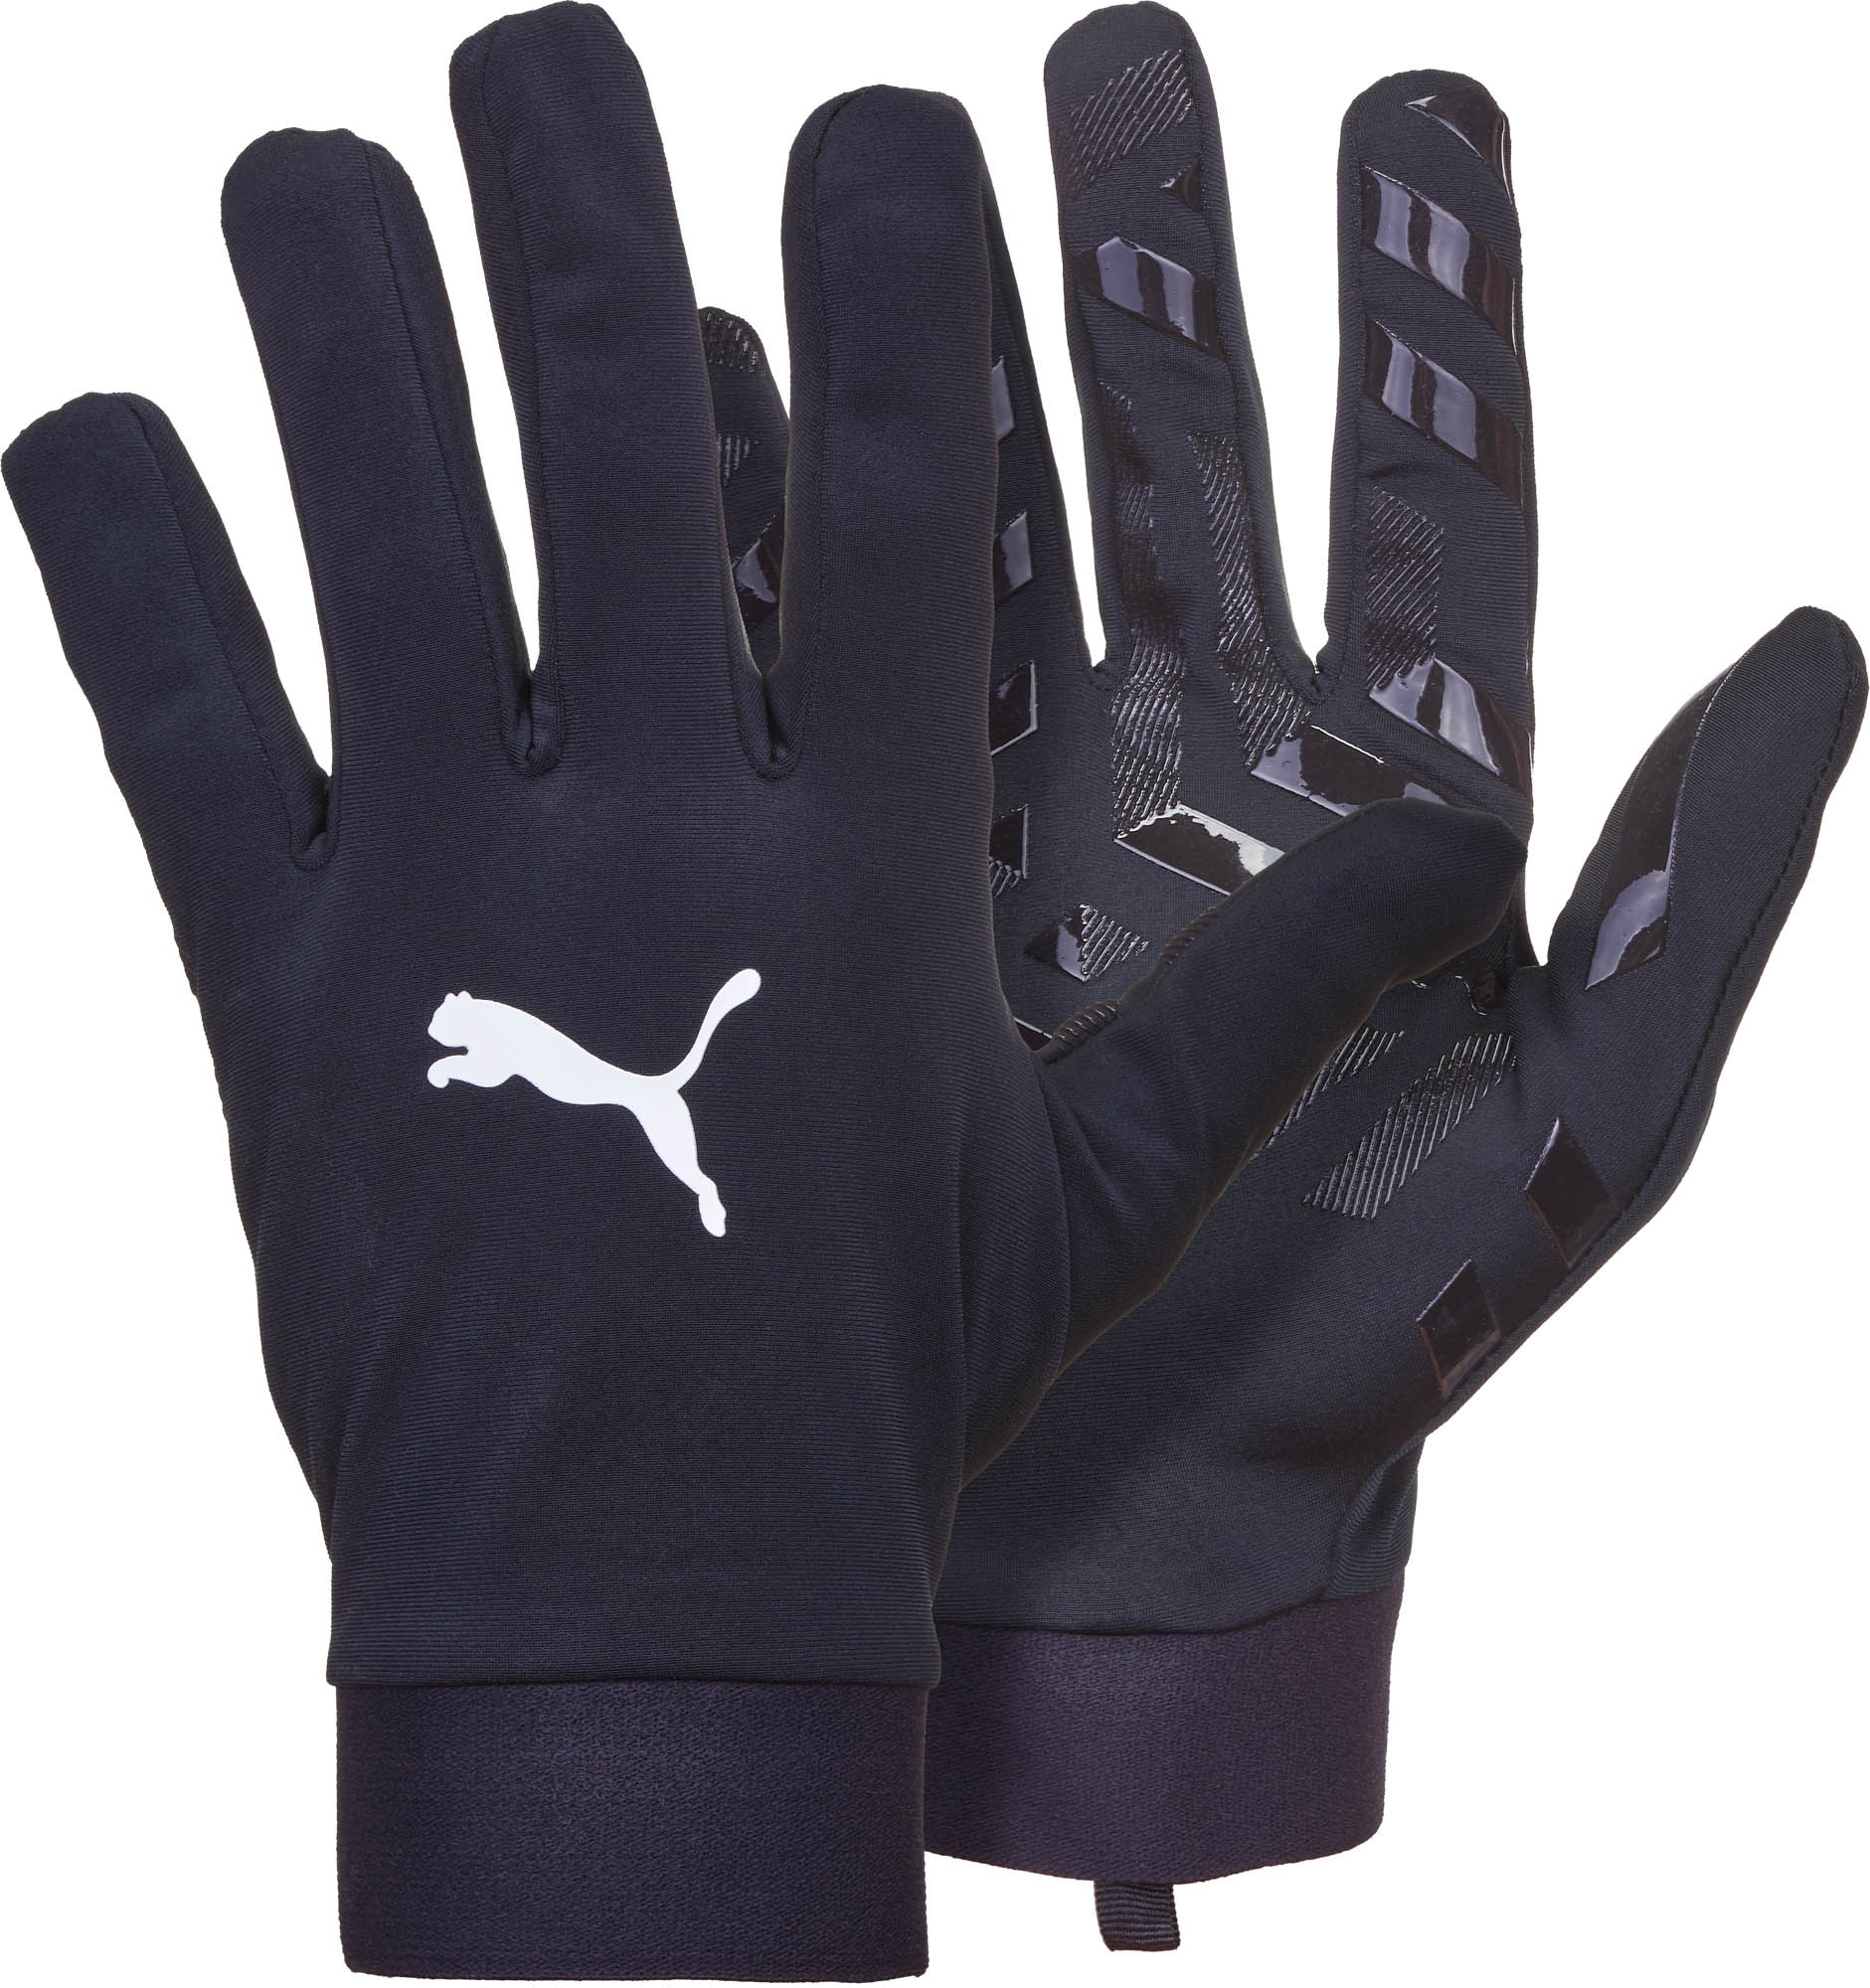 puma field player gloves size chart